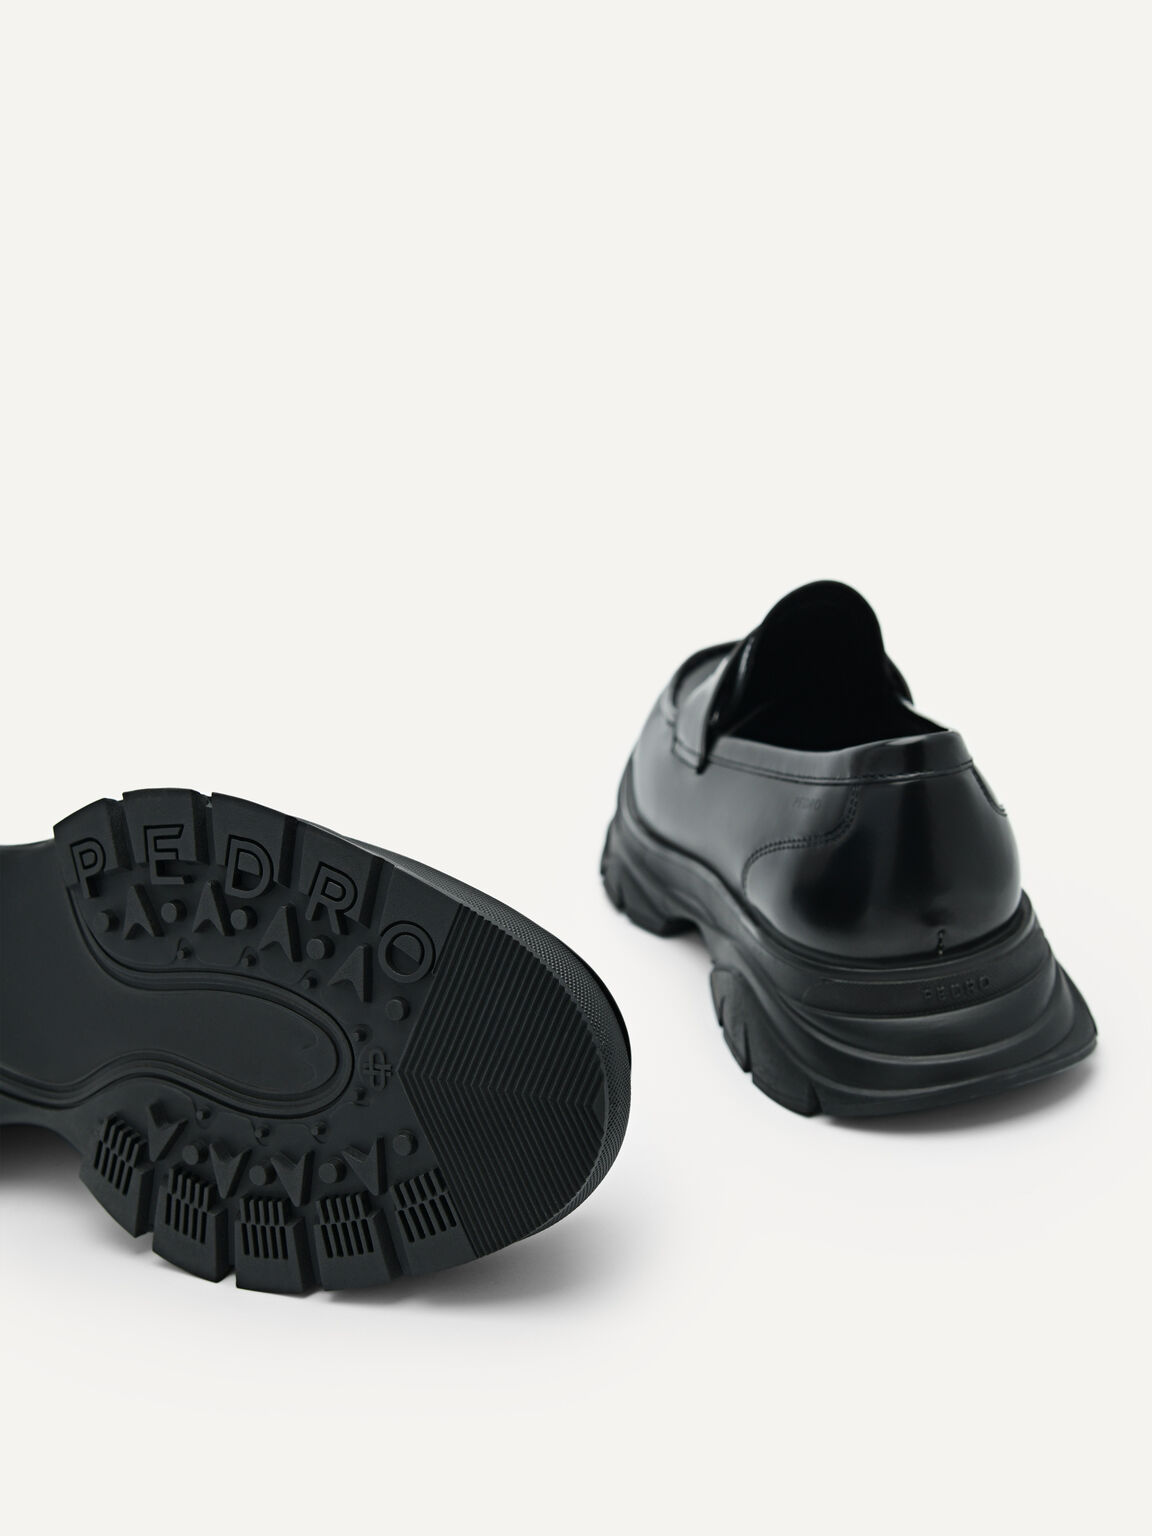 Hybrix Leather Penny Loafers, Black